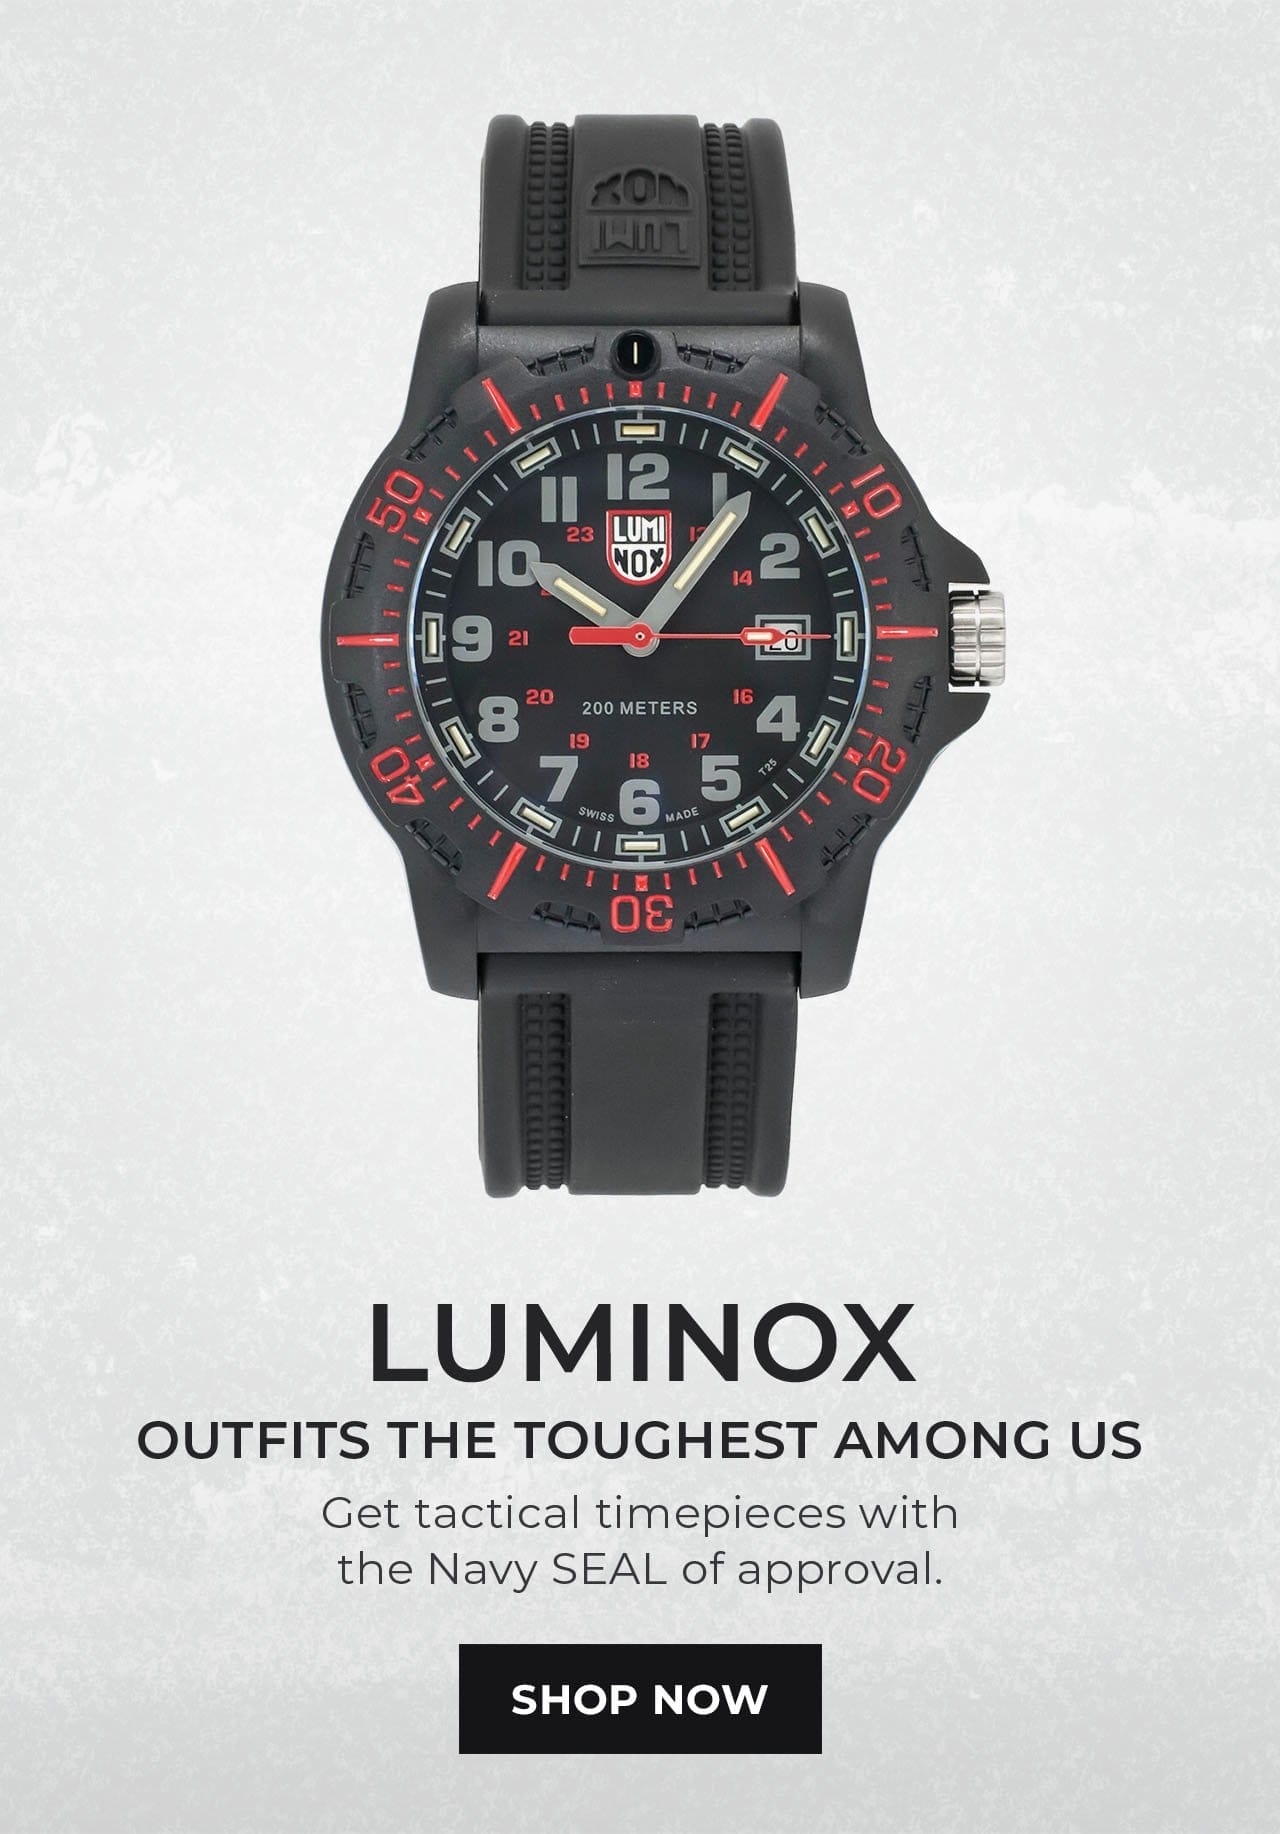 Luminox Tactical Timepieces | SHOP NOW